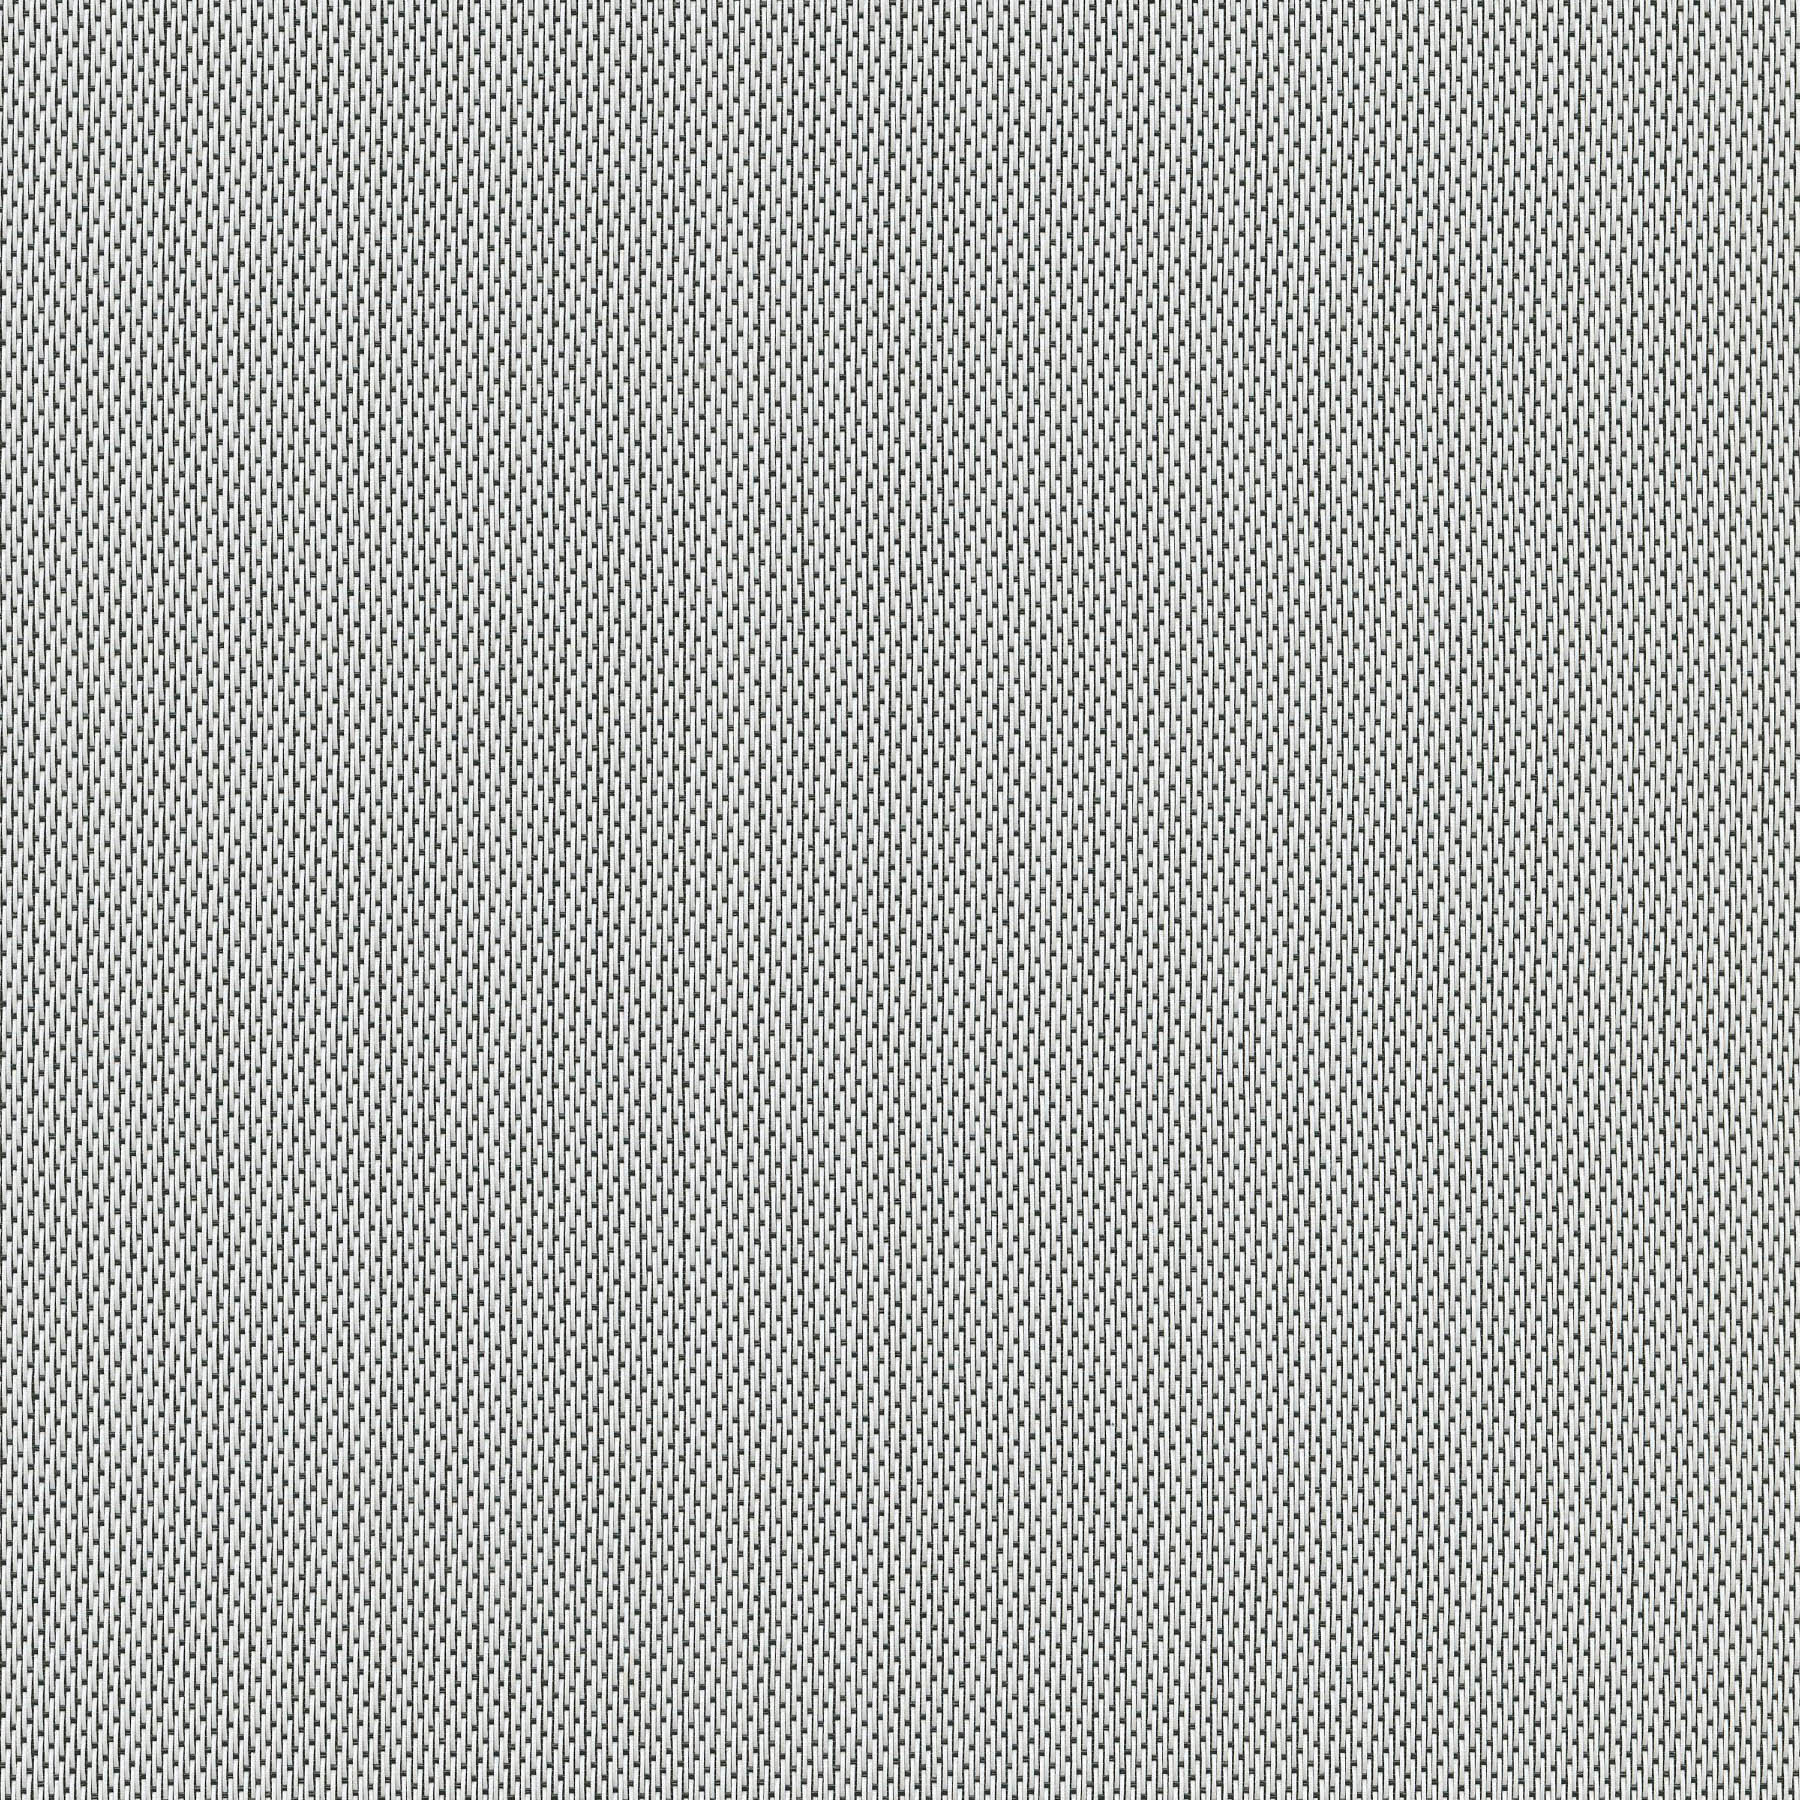 Altex - Fabric - SHEERWEAVE 2703 - Charcoal/White - 165